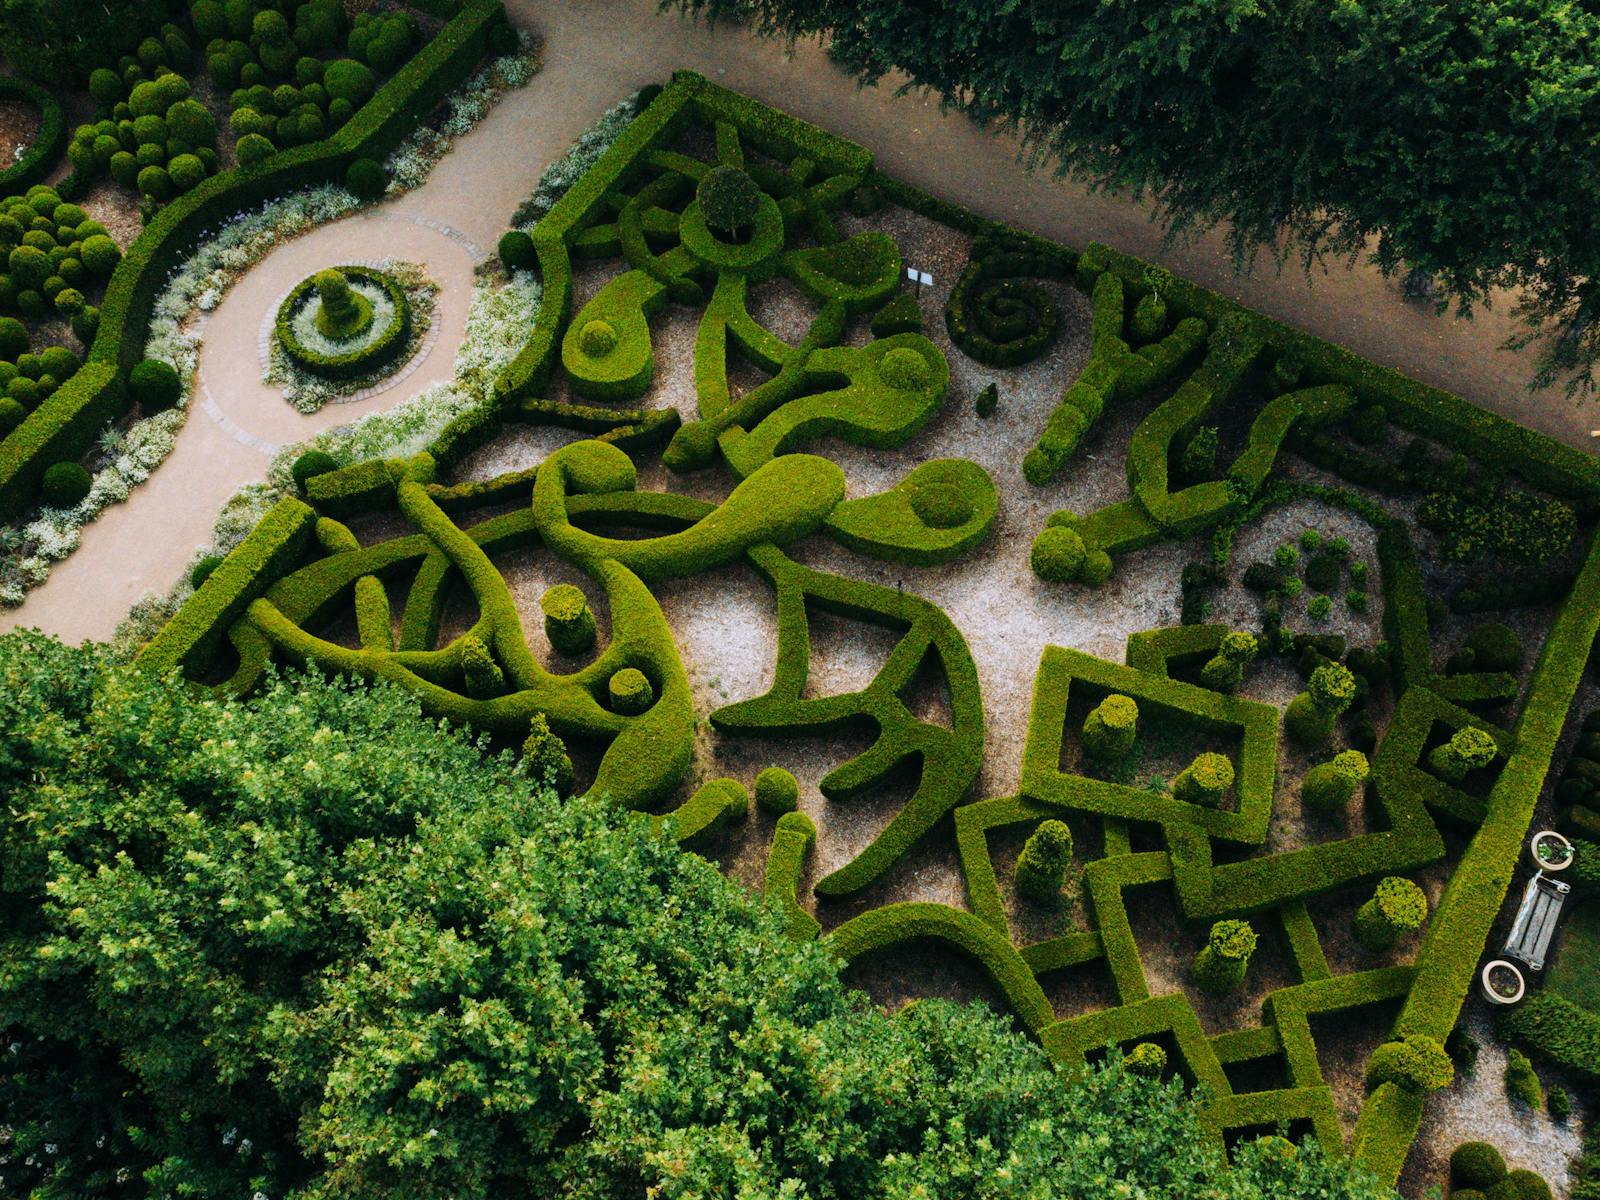 Aerial view of the 'Dordogne' garden